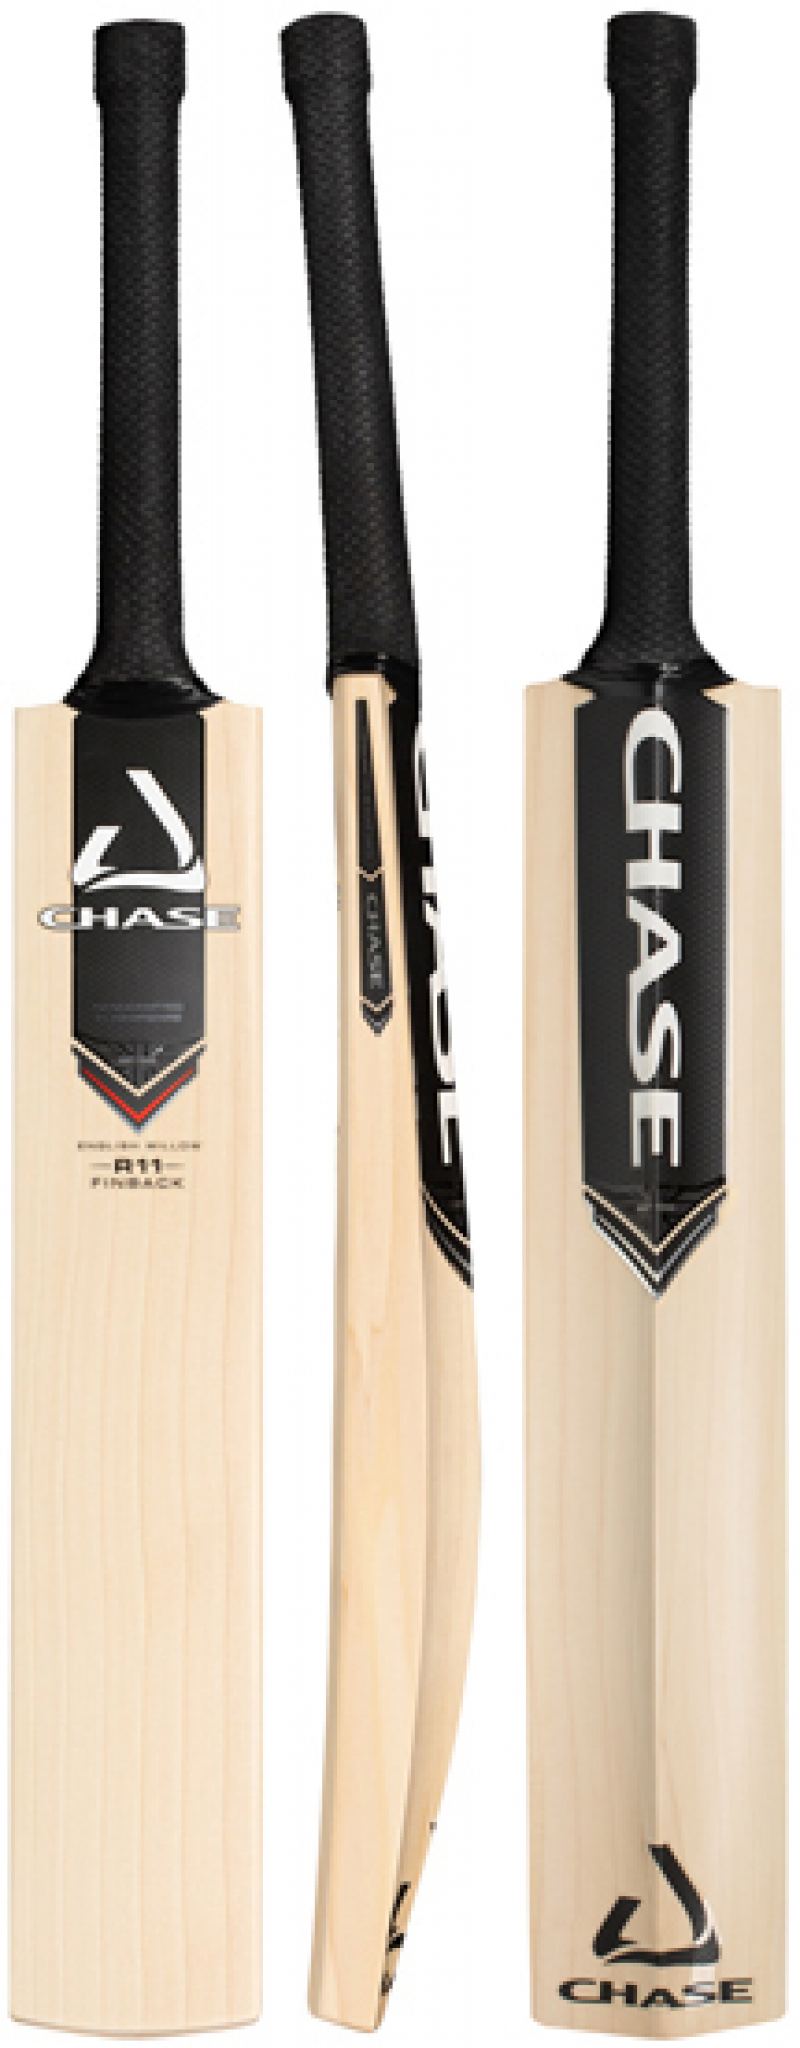 Chase Finback R7 Cricket Bat